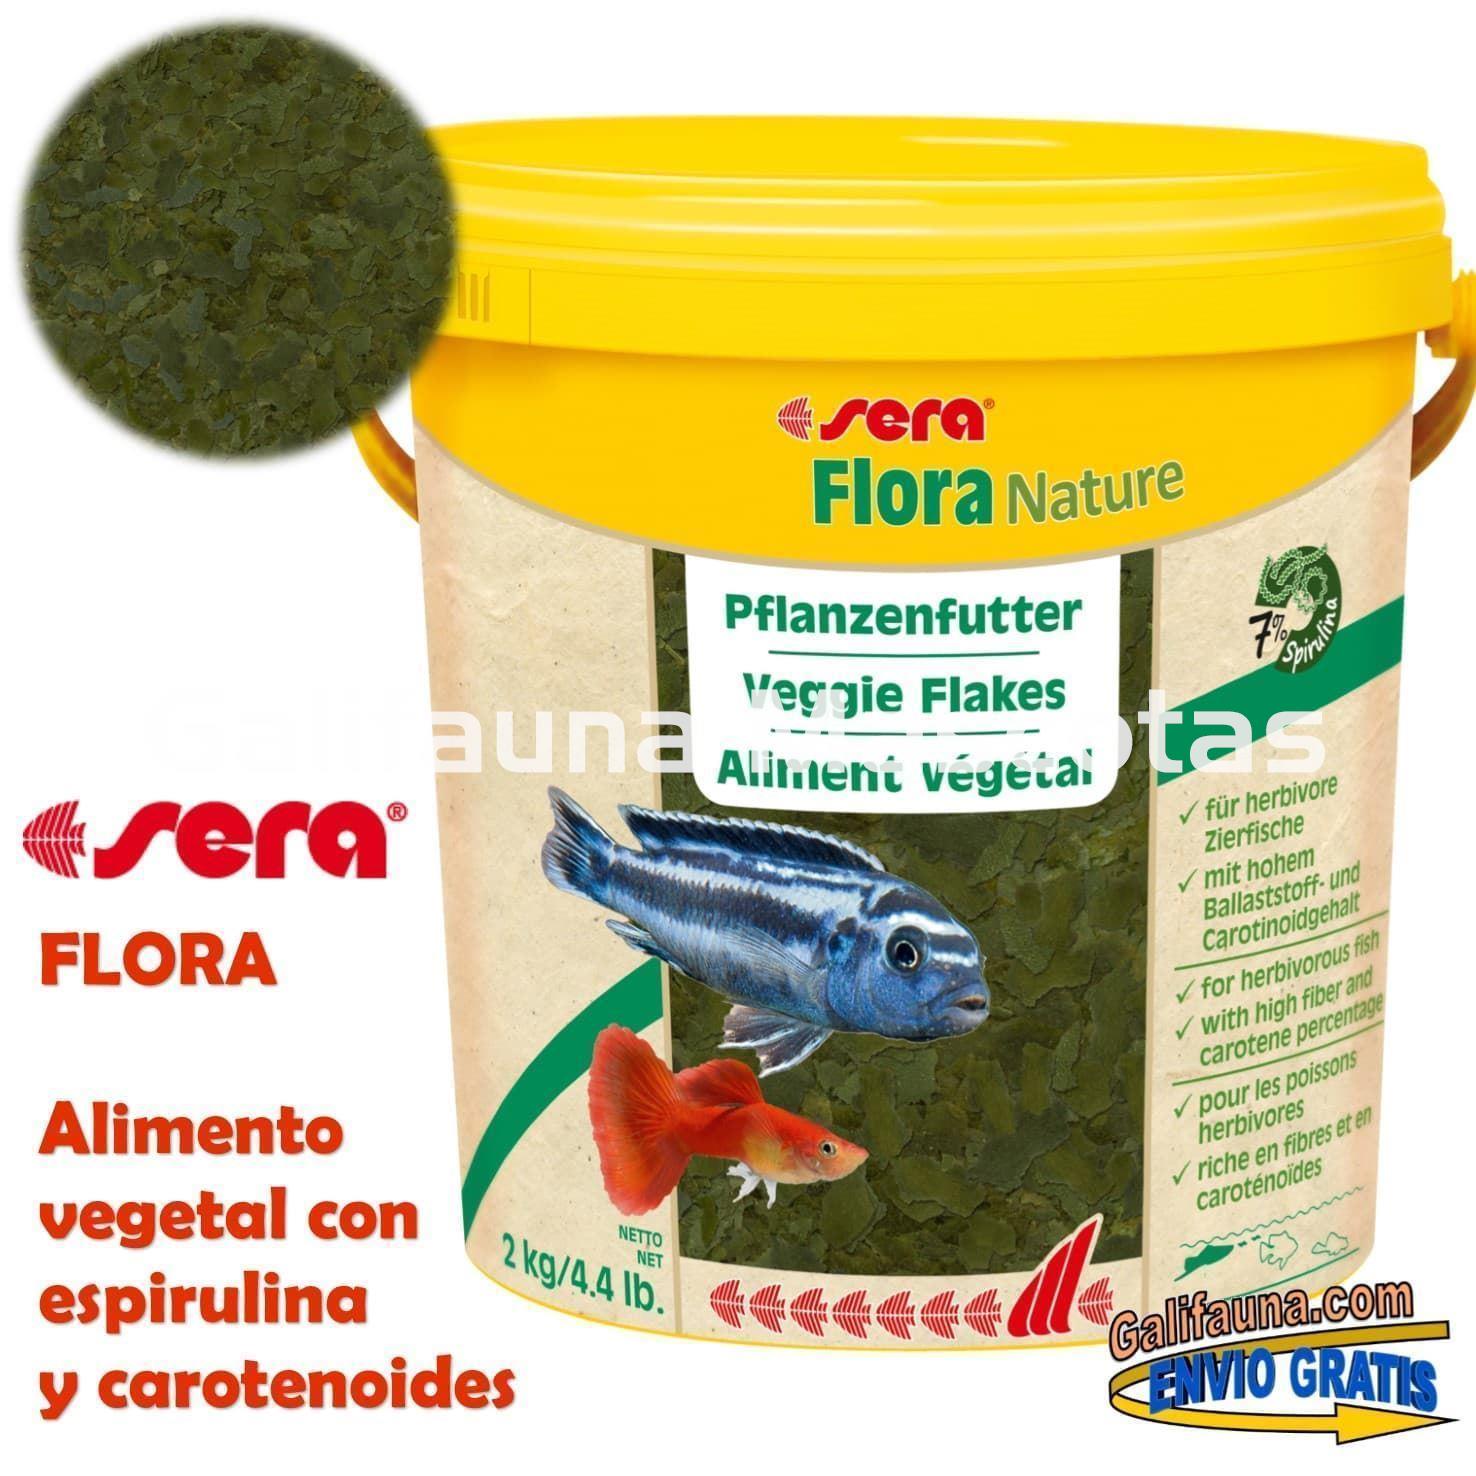 Sera Flora 10 litros. Alimento vegetal con espirulina. - Imagen 1